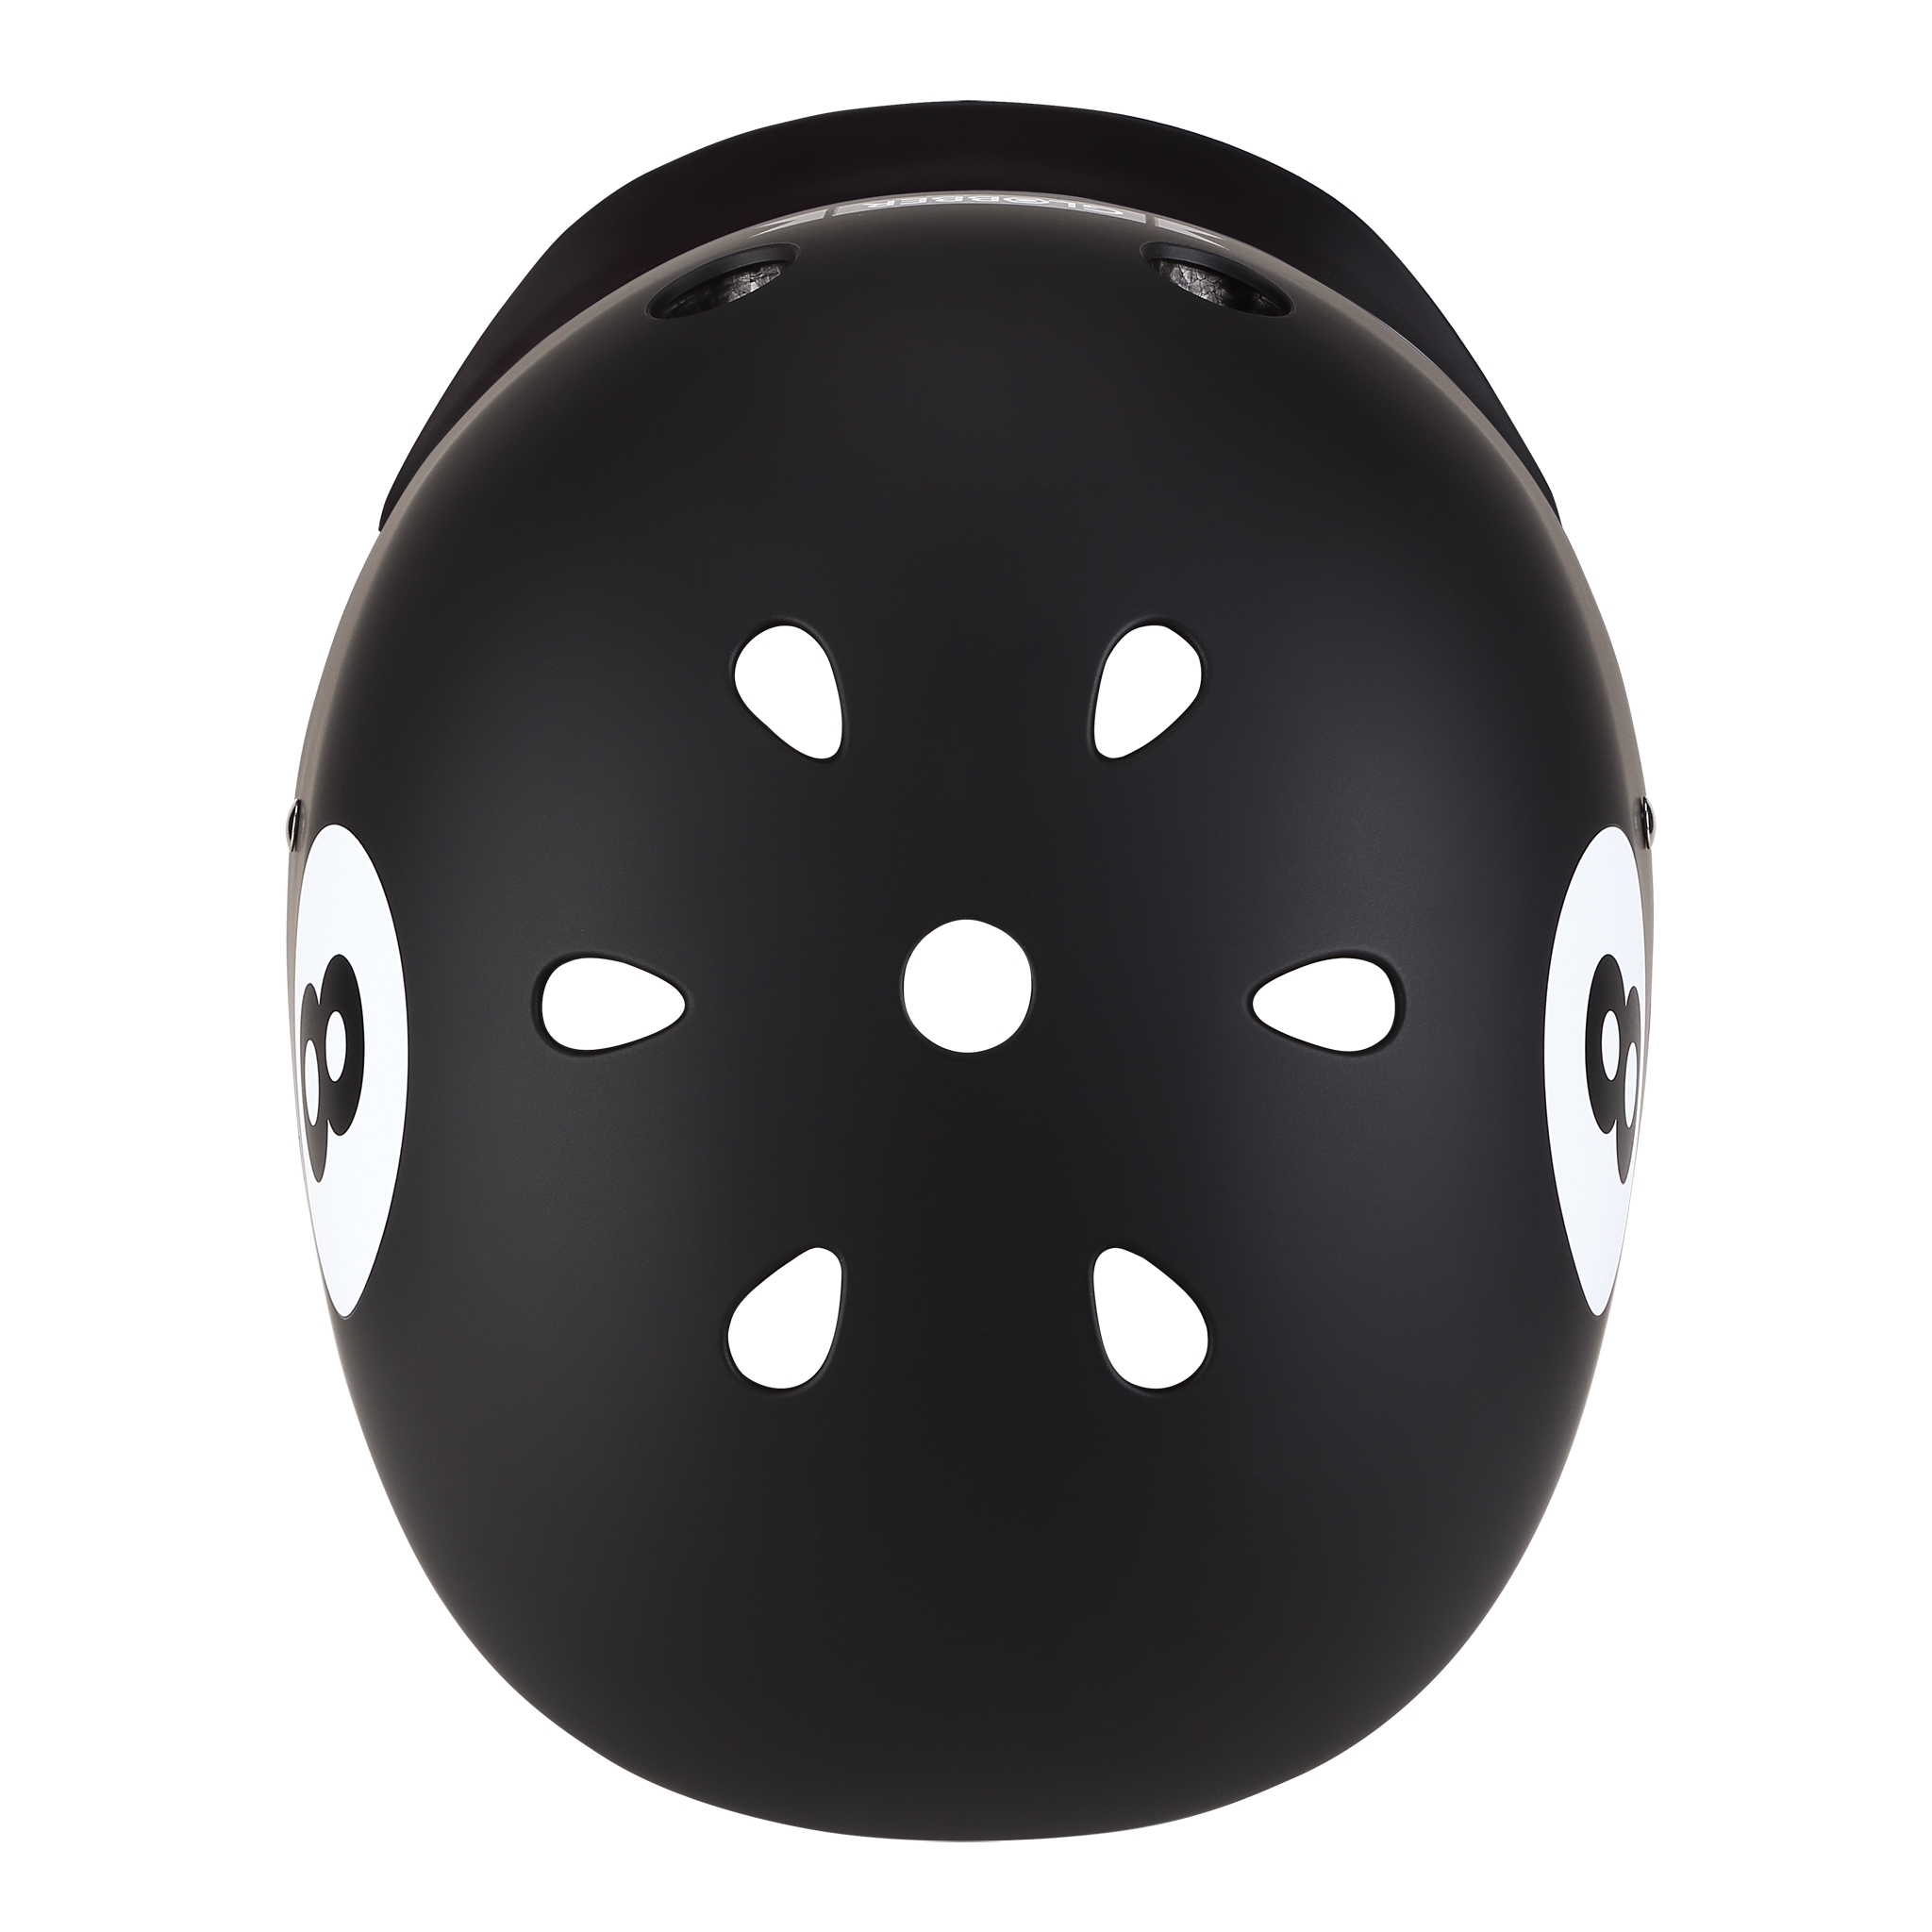 ELITE-helmets-best-scooter-helmets-for-kids-with-air-vents-cooling-system-black 3